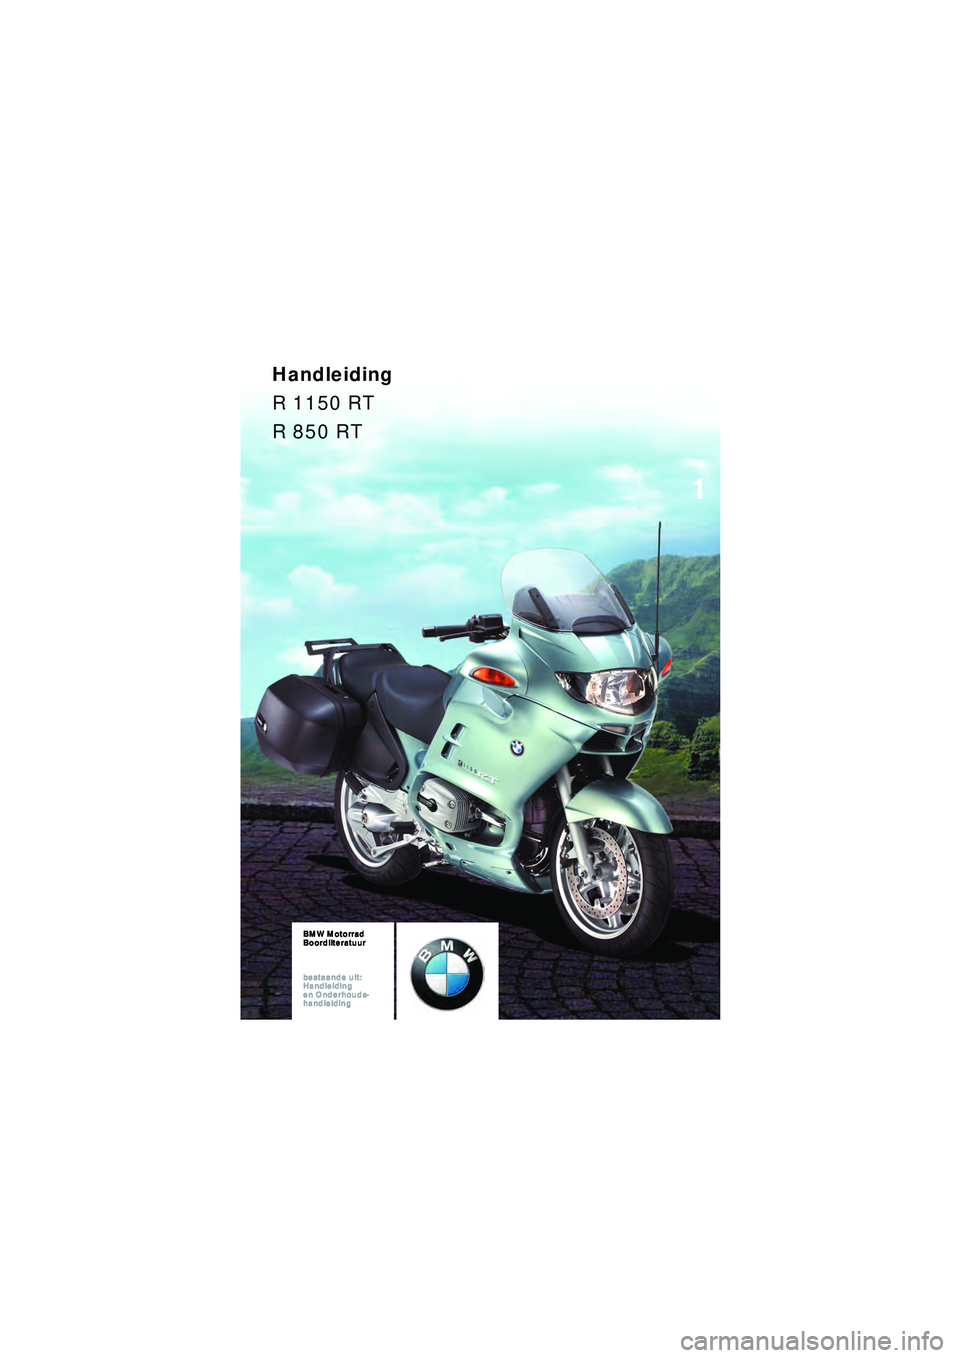 BMW MOTORRAD R 1150 RT 2002  Handleiding (in Dutch) 1
BMW Motorrad
Boordliteratuur
bestaande uit:  
Handleiding  
en Onderhouds- 
handleiding BMW Motorrad
Boordliter
atuur
bestaande uit:  
Handleiding  
en Onderhouds- 
handleiding BMW Motorrad
Boor dli